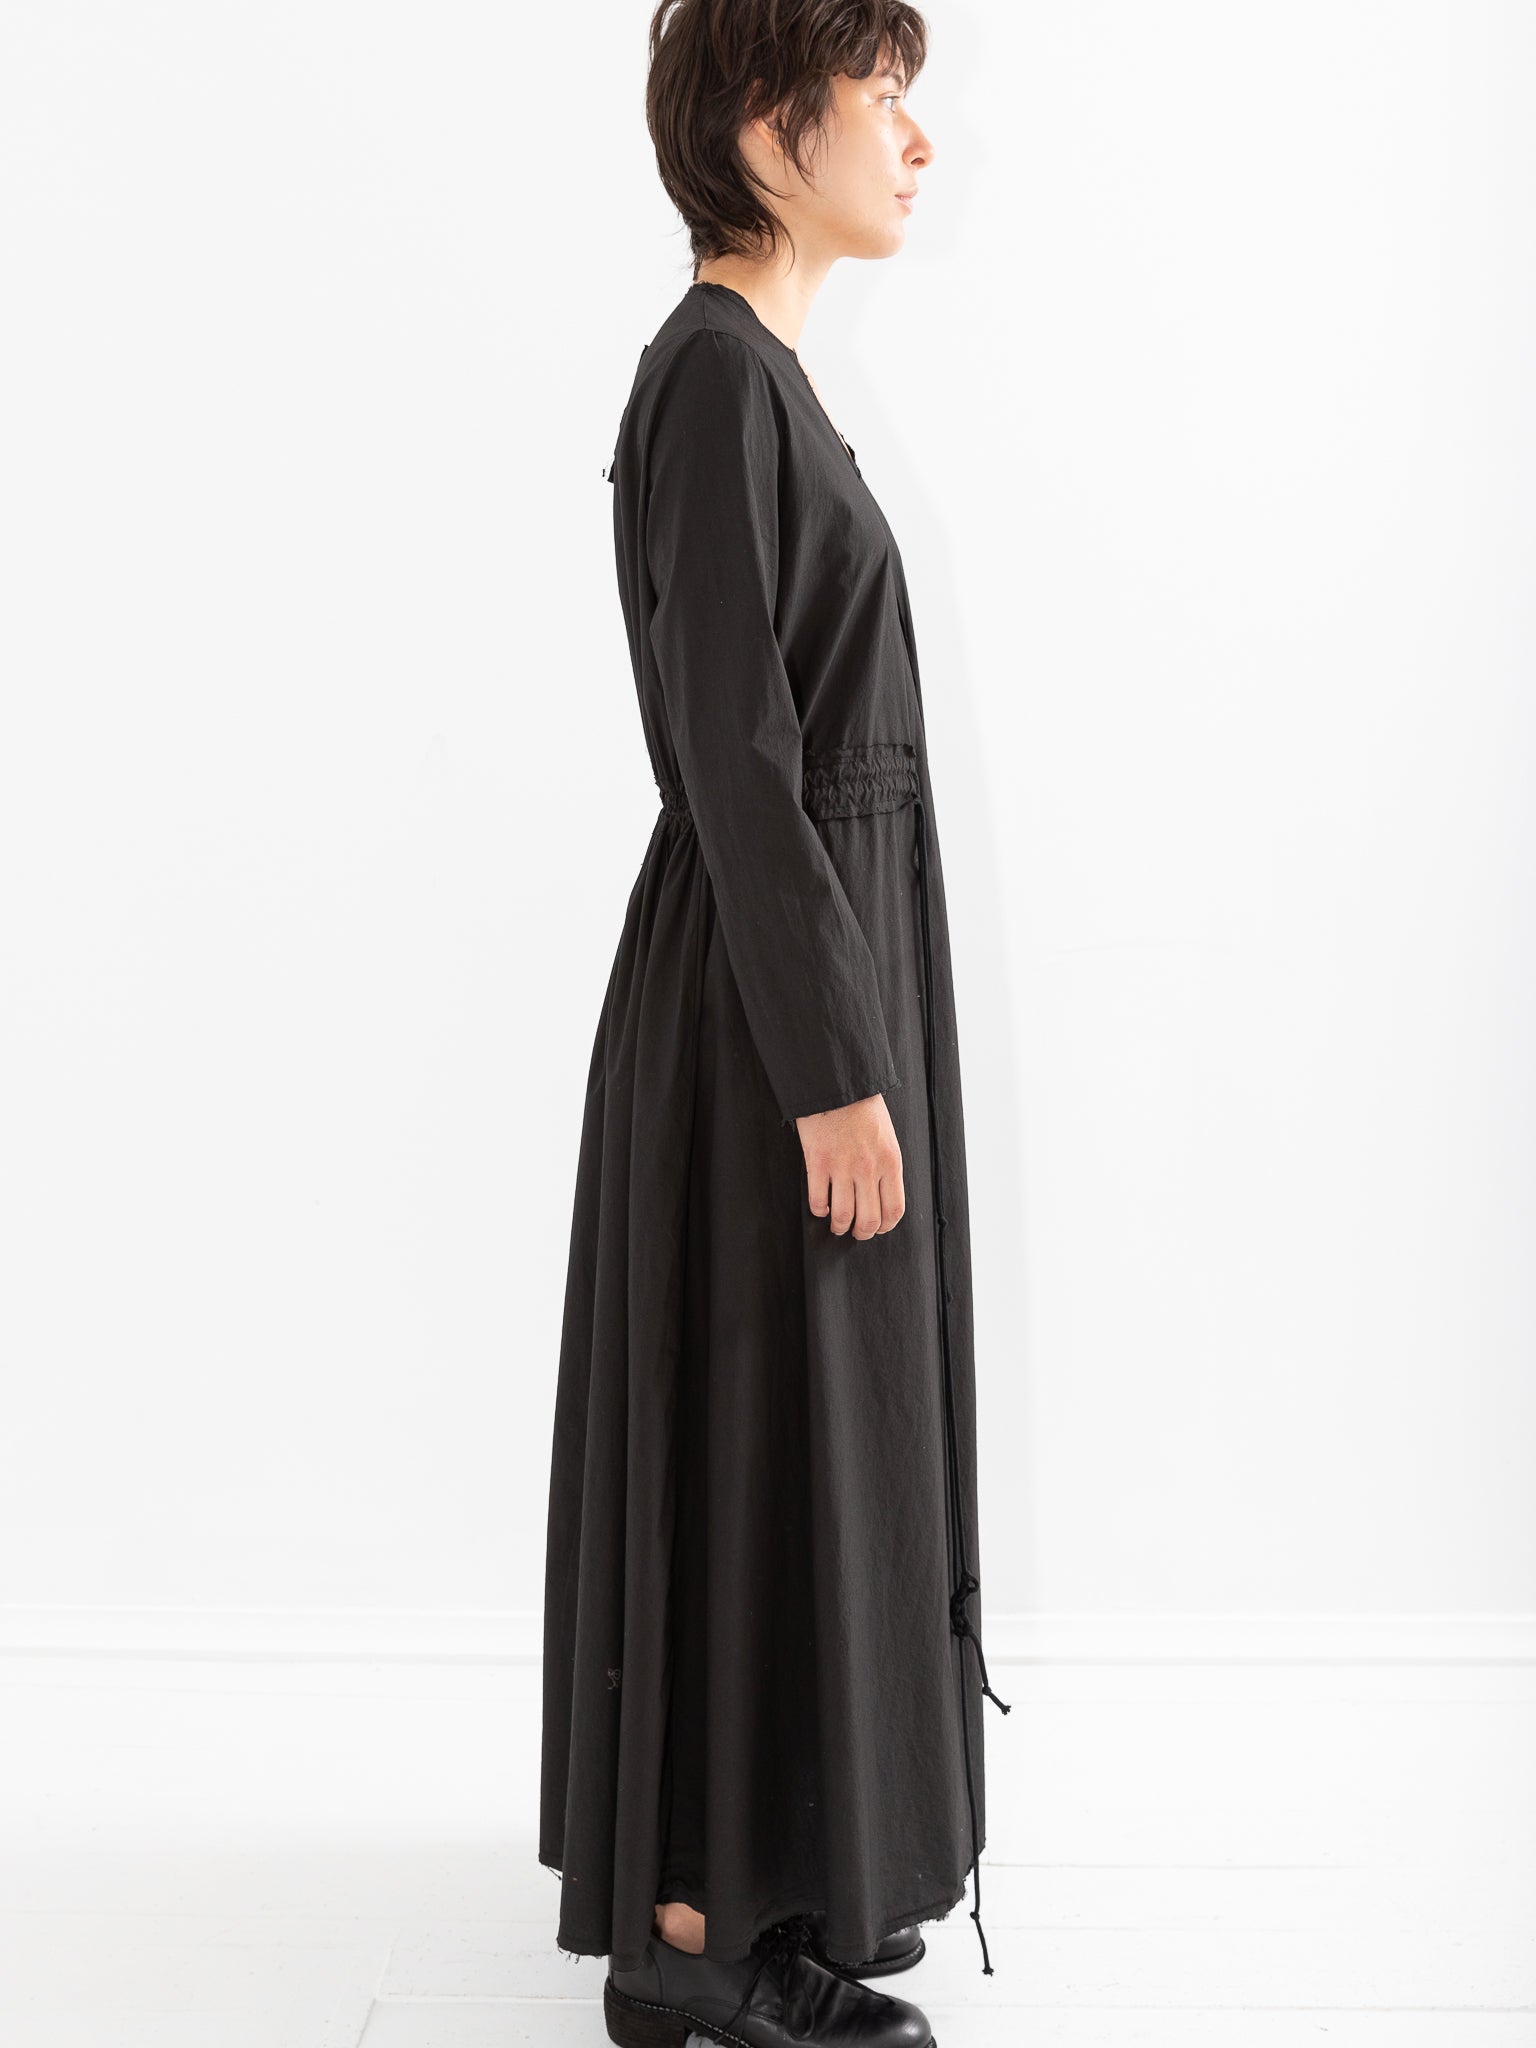 Serie Numerica Boxy Dress, Black - Worthwhile